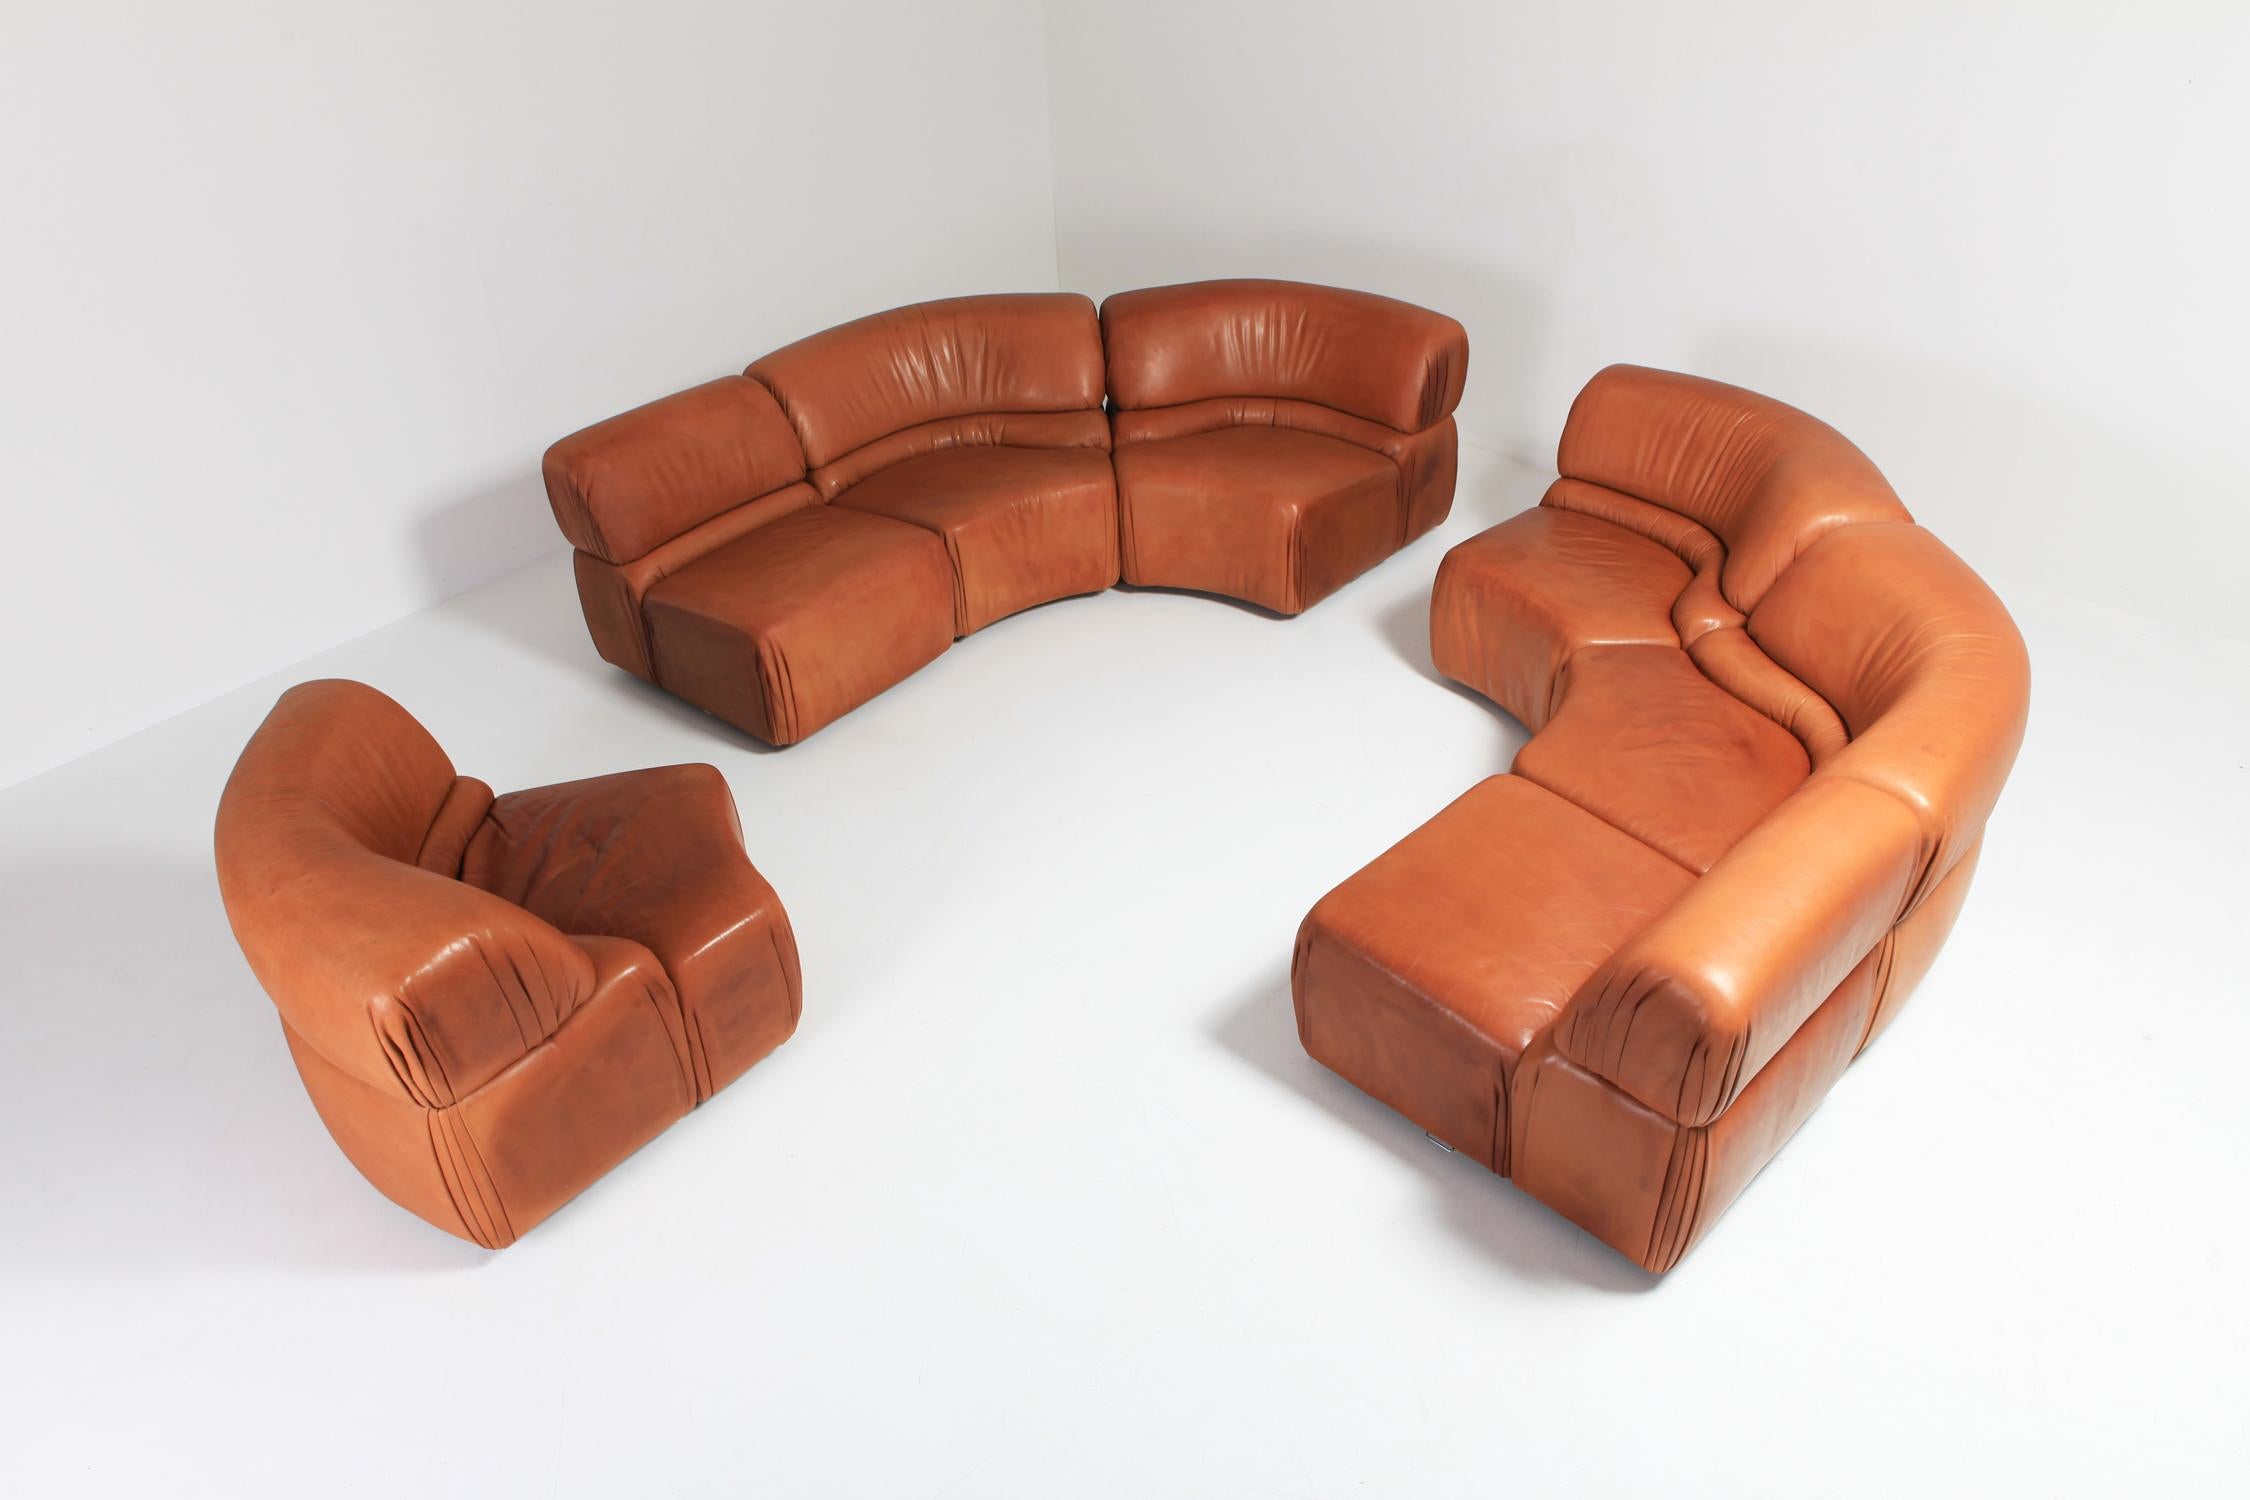 20th Century Sectional Cognac Leather Sofa 'Cosmos' by De Sede, Switzerland